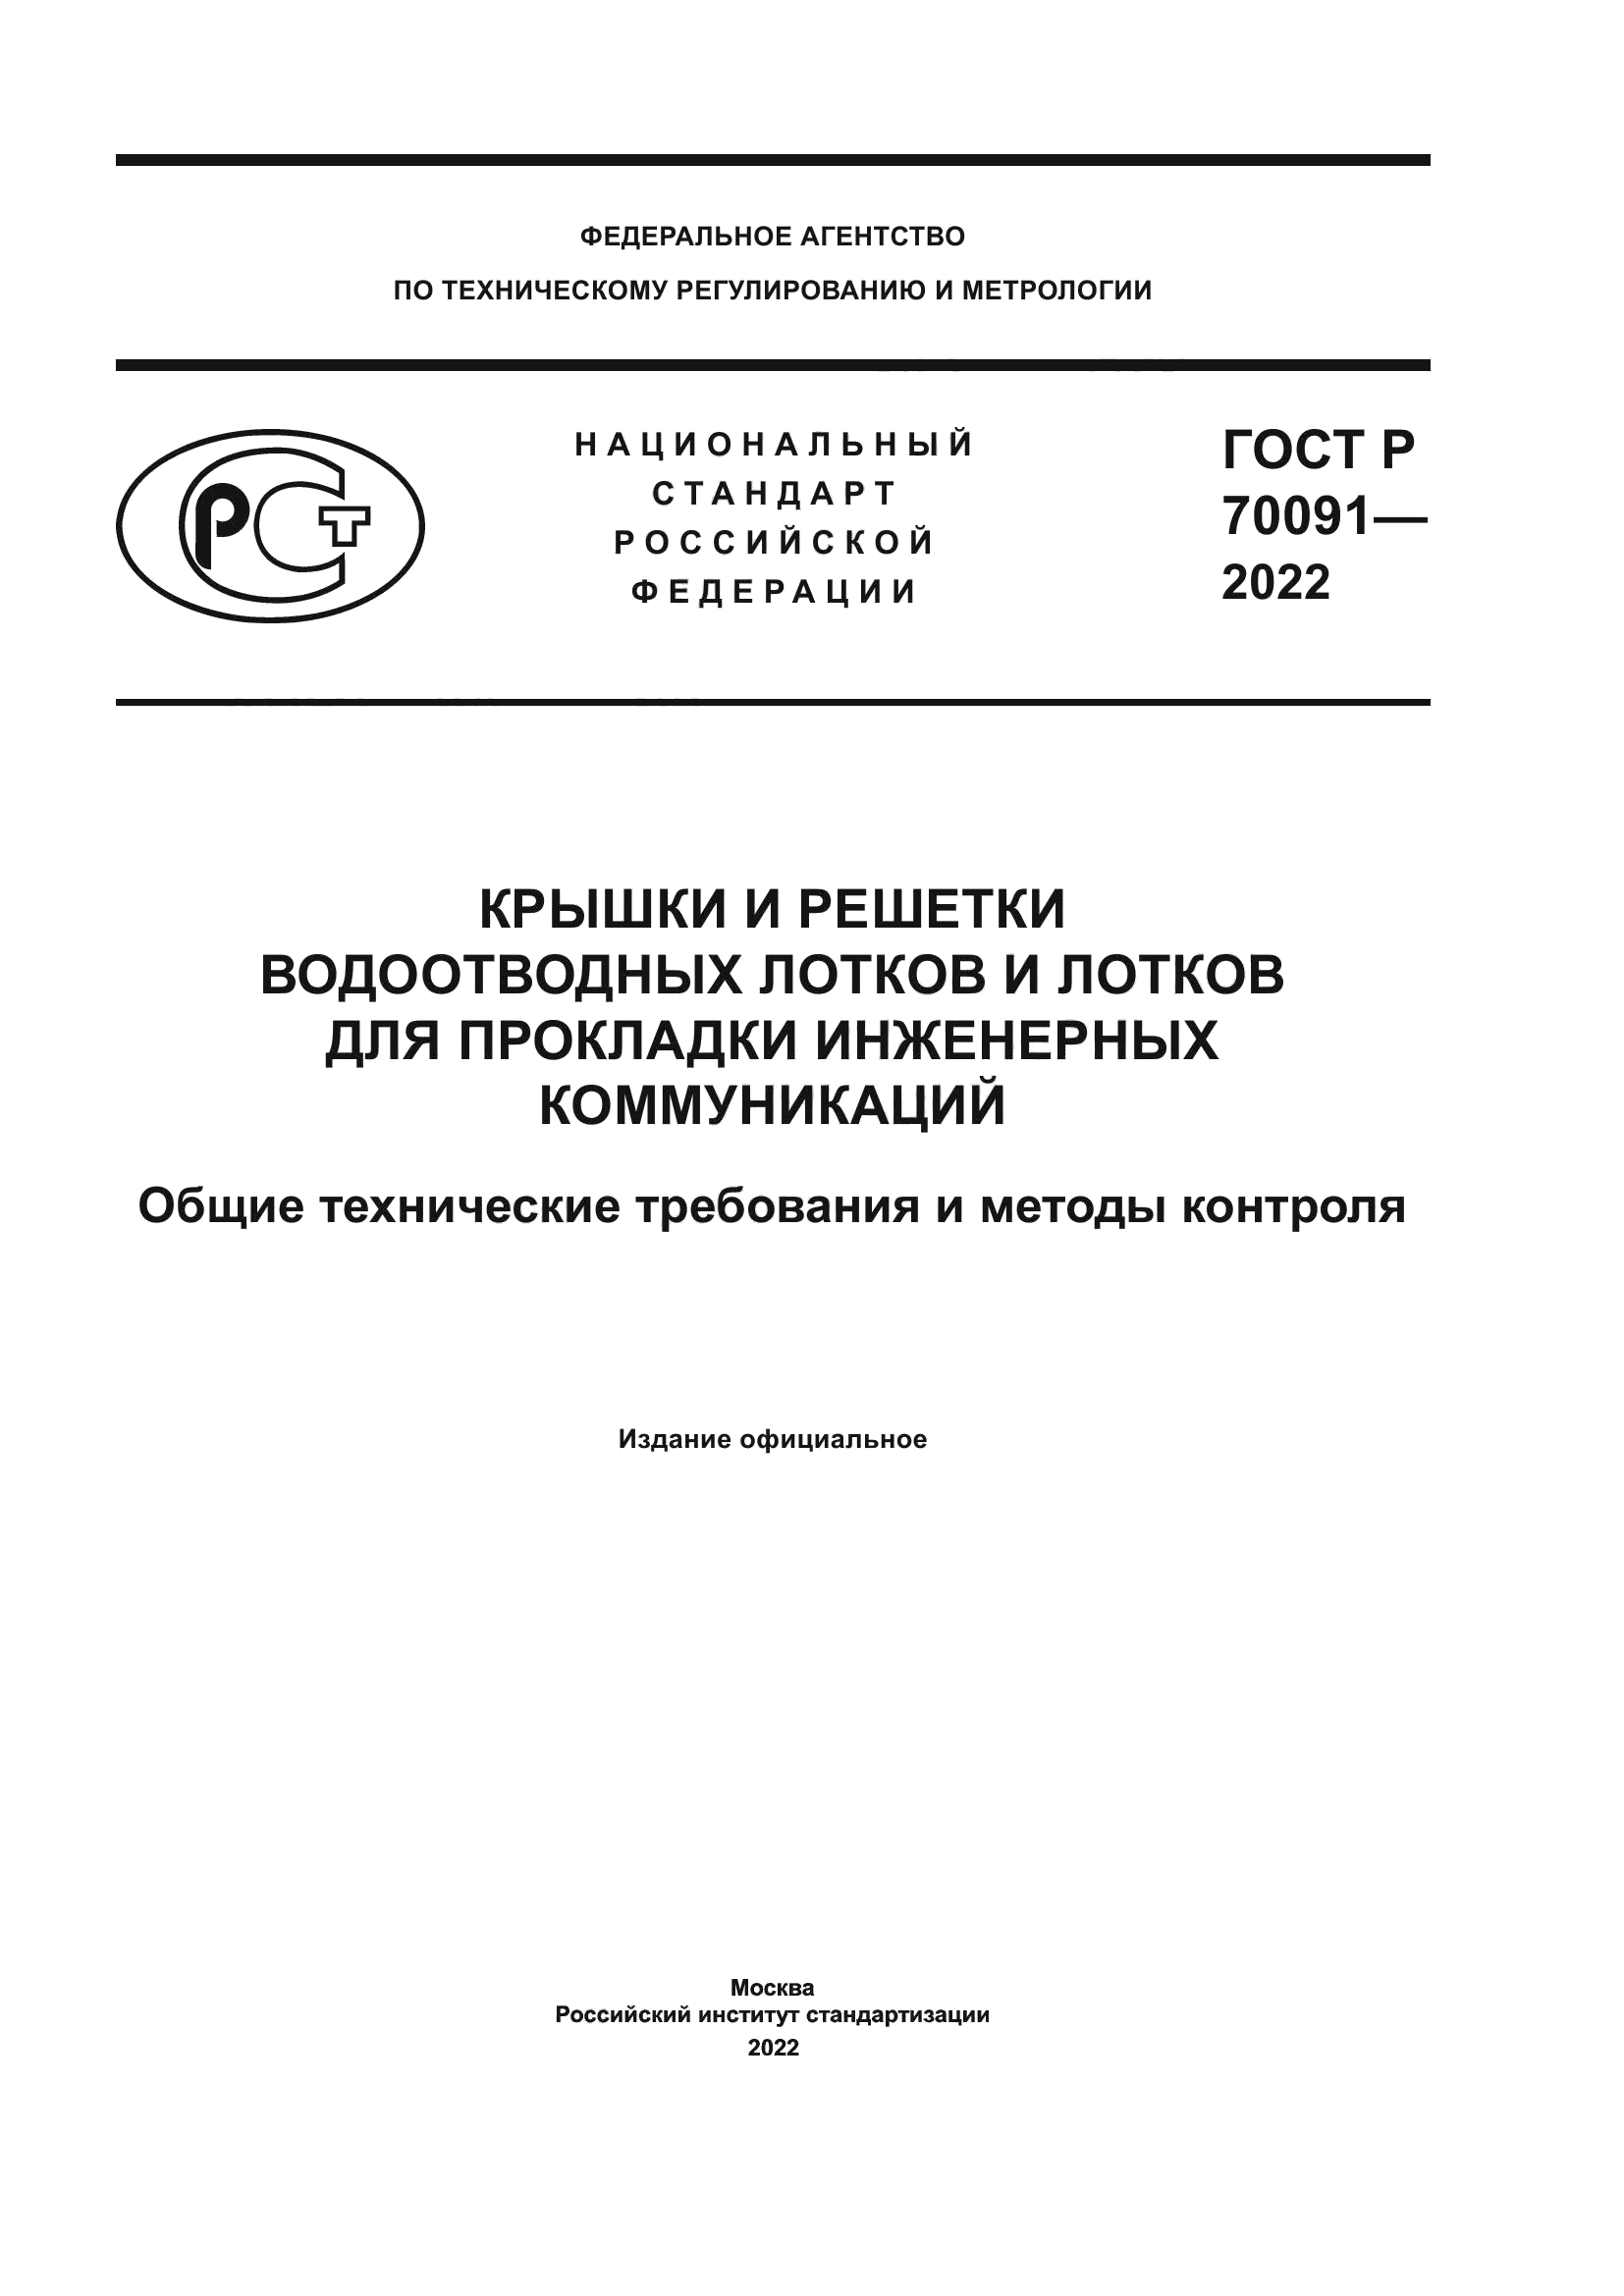 ГОСТ Р 70091-2022